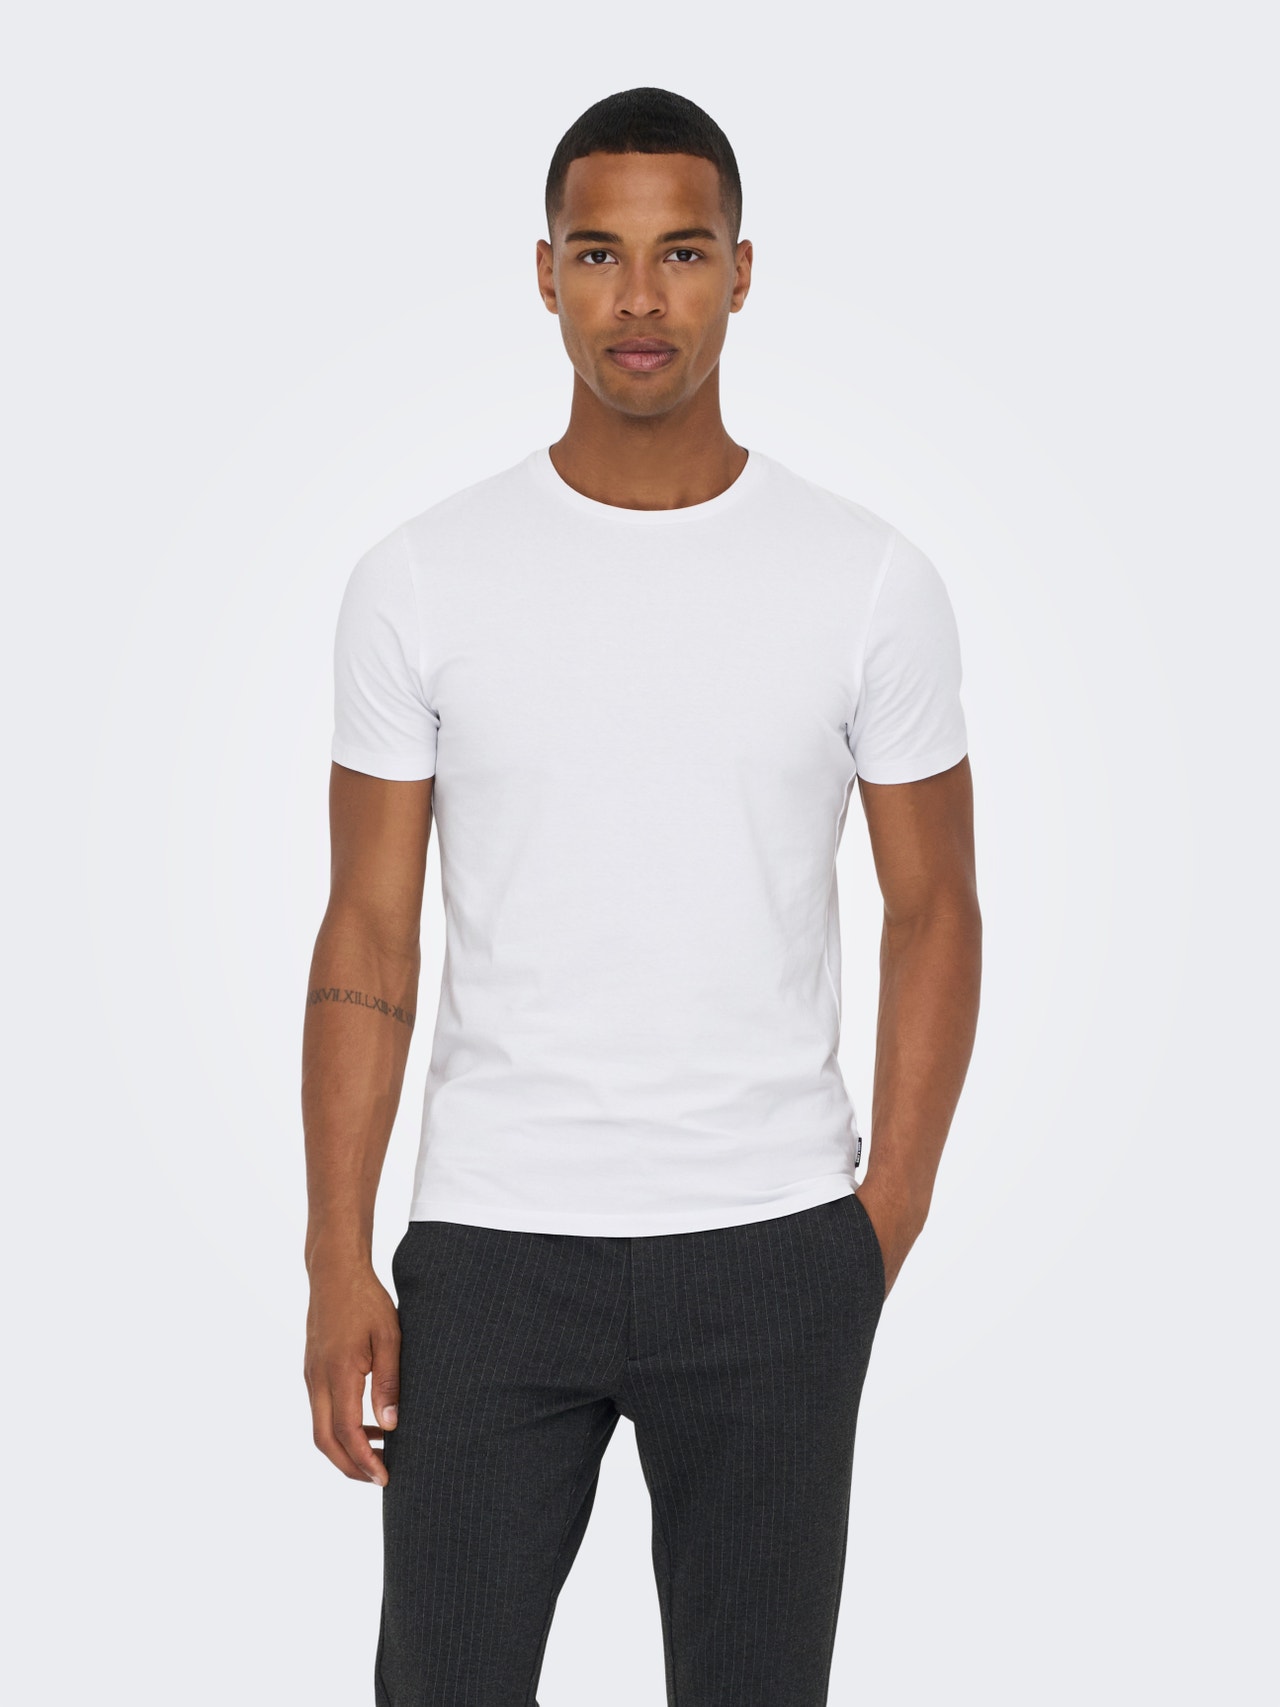 tendens Officer strøm Slim Fit O-Neck T-Shirt | White | ONLY & SONS®